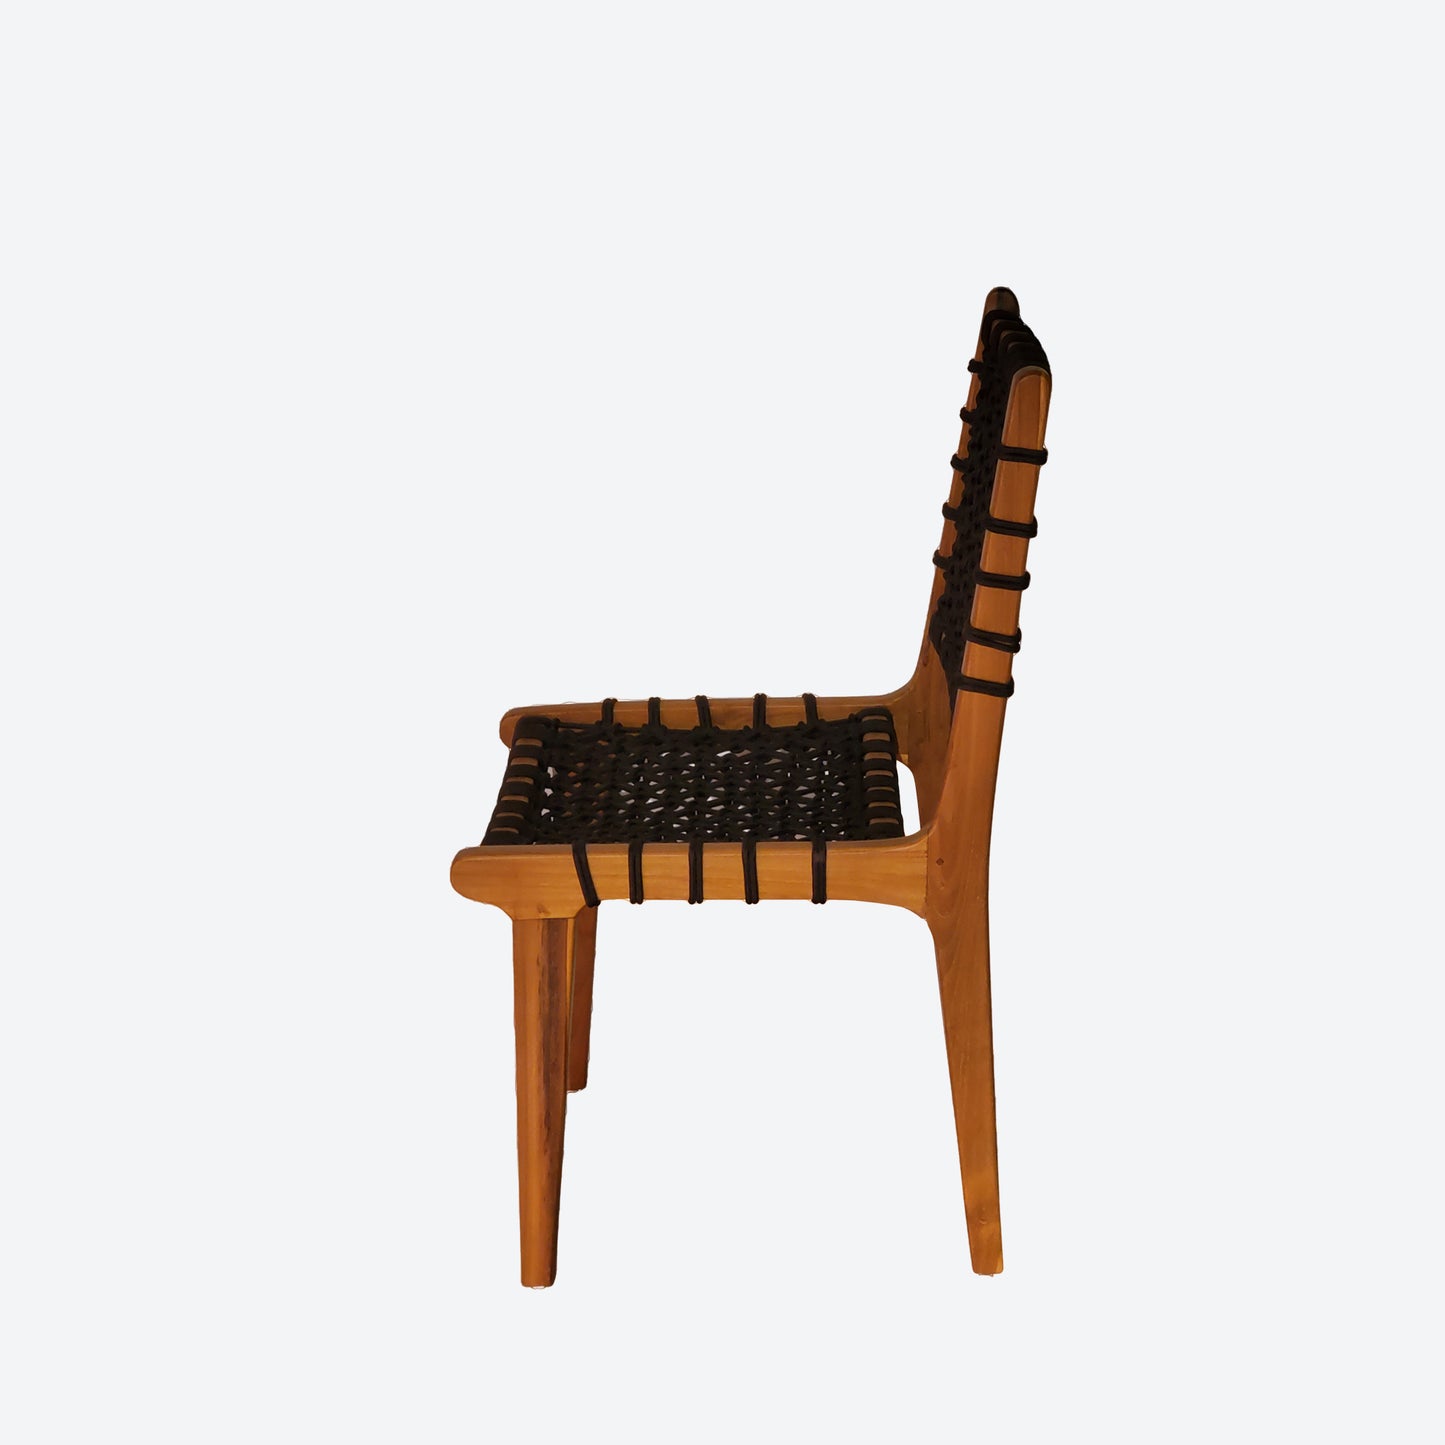 Black Dyed Rattan Teak Dining Chair -SK (SKU 1163)